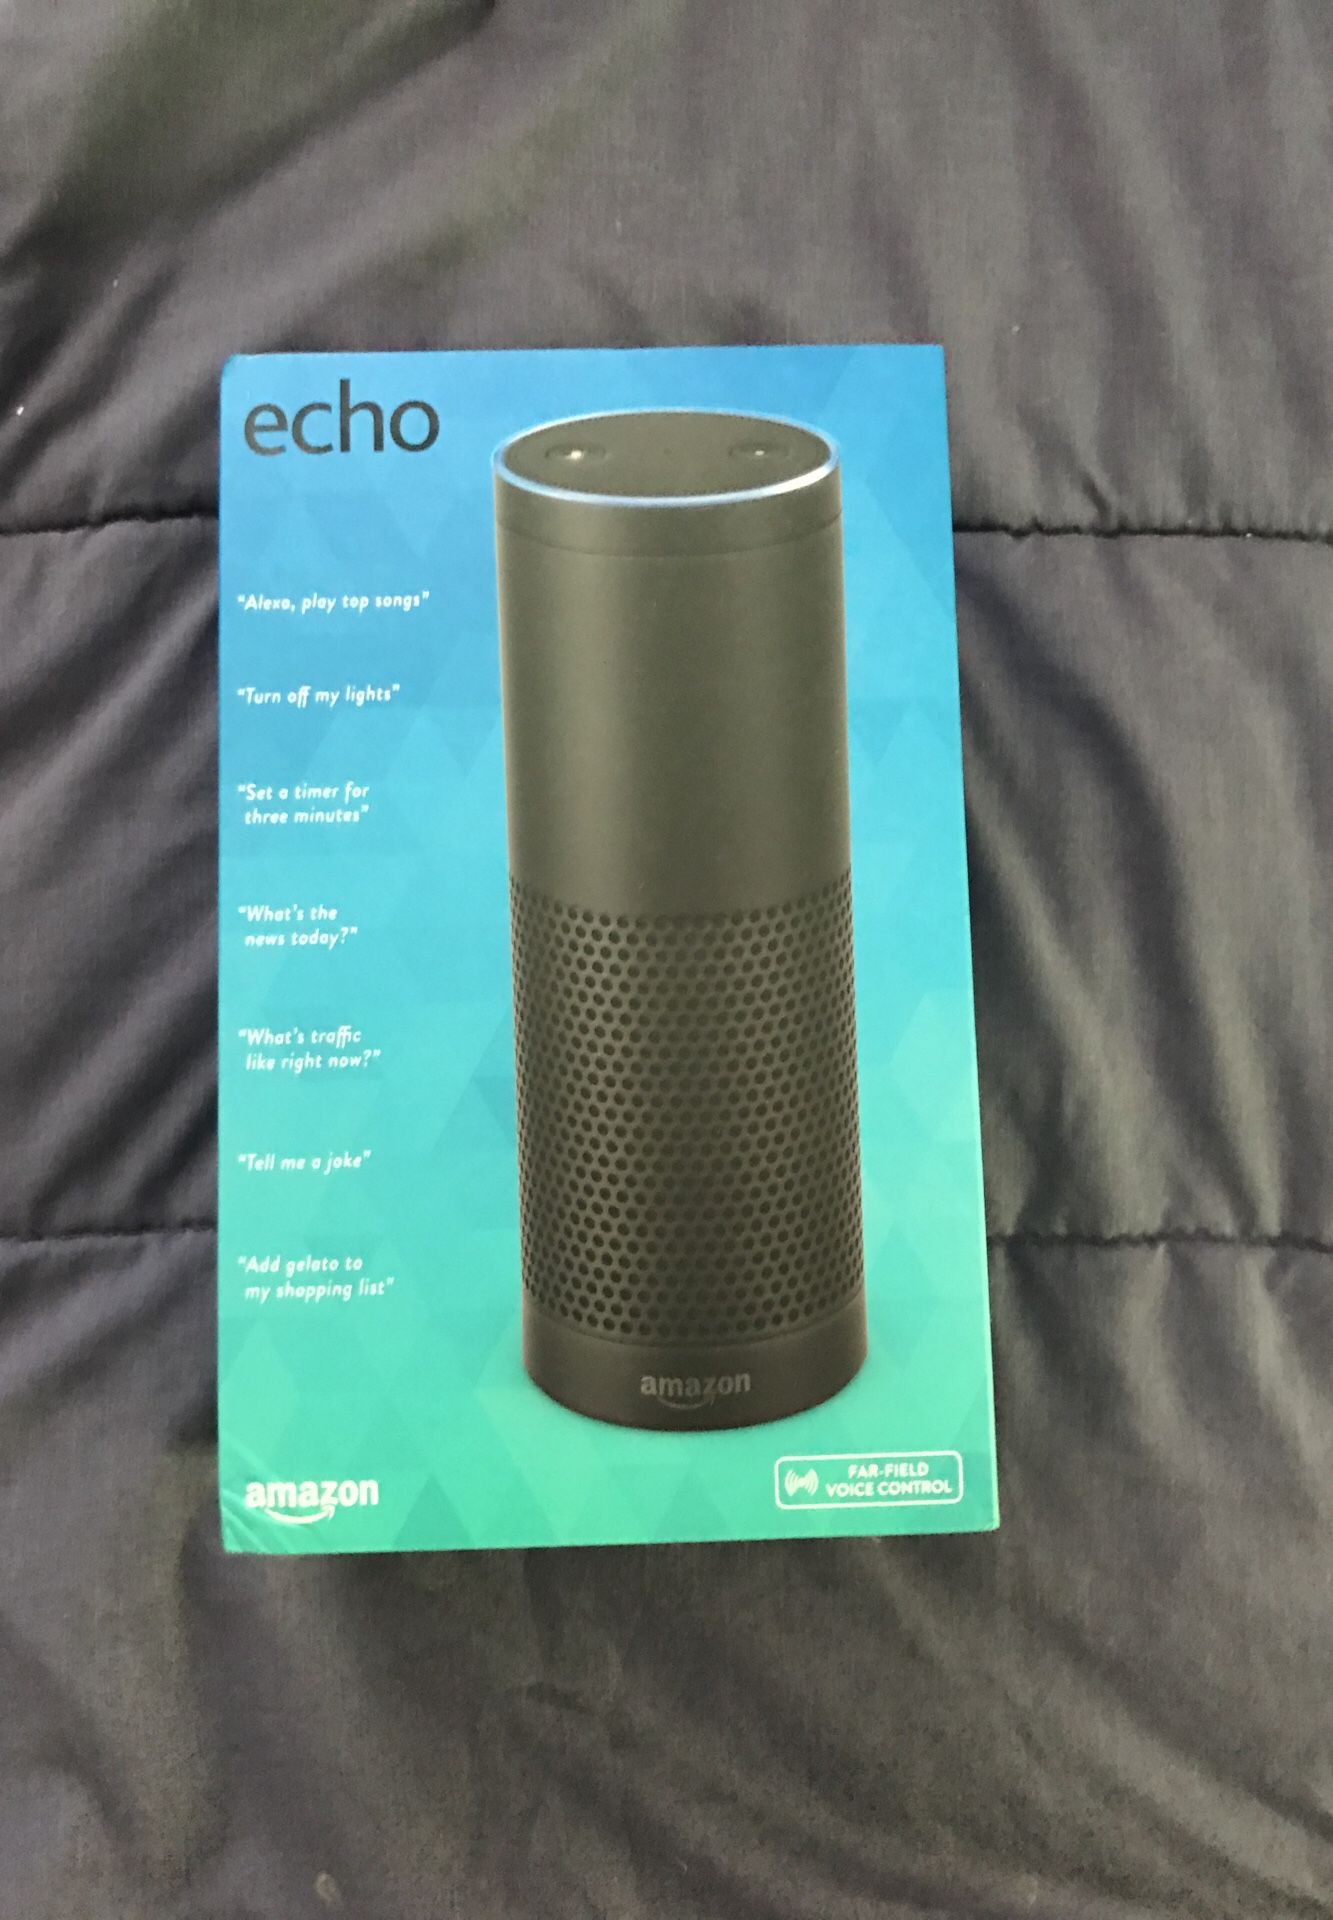 Amazon Echo for sale! Brand new